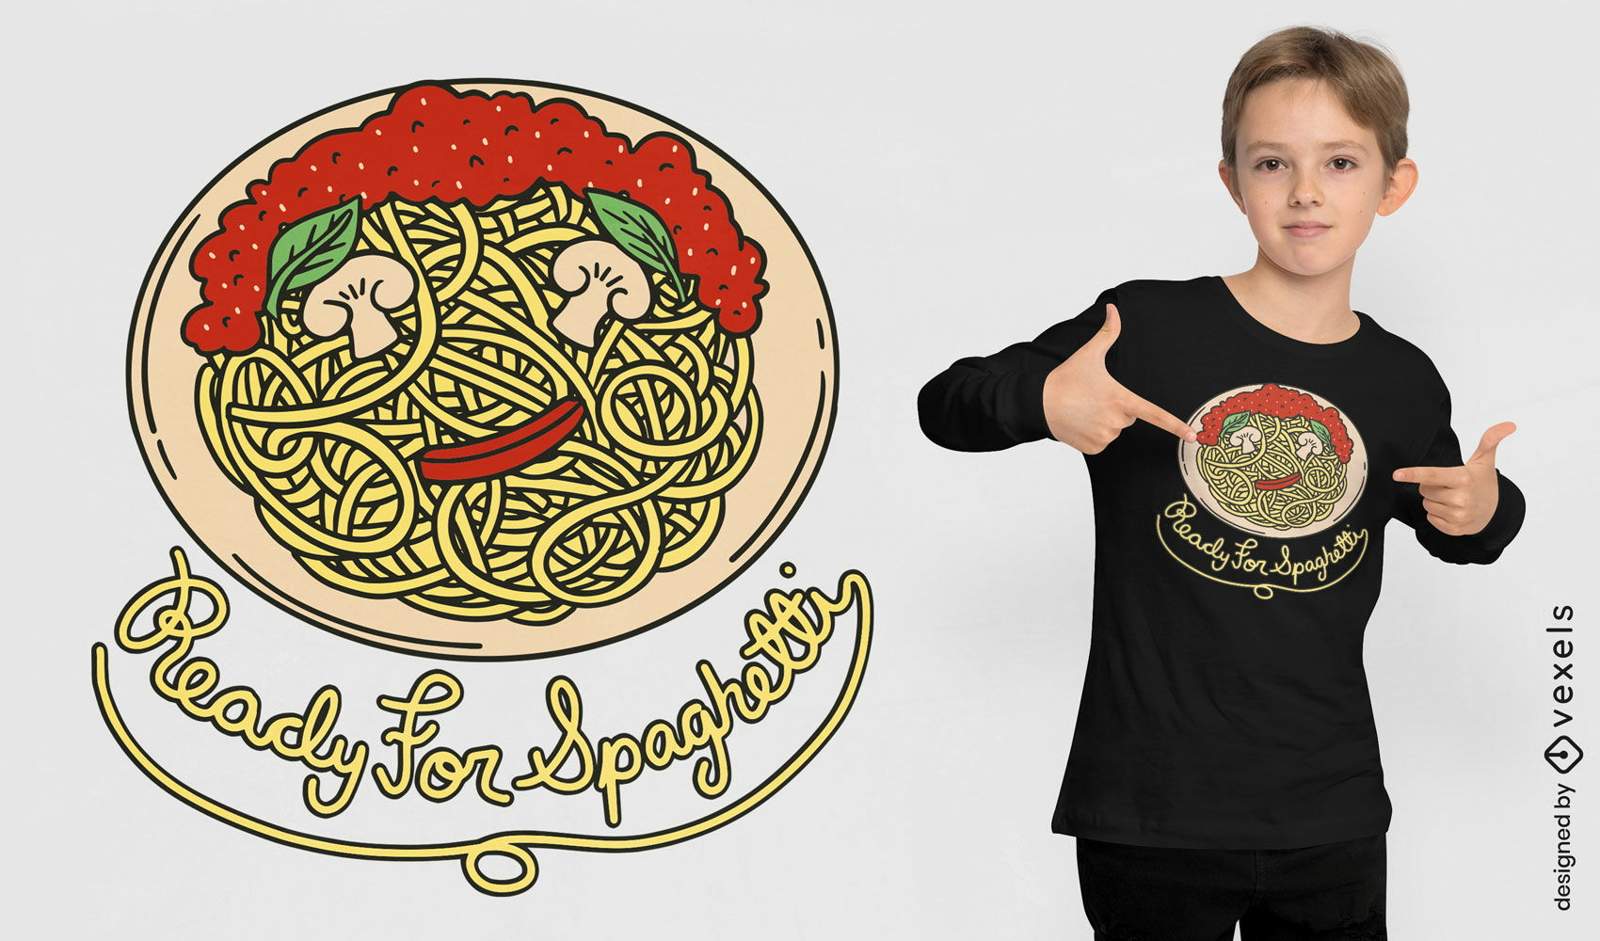 Spaghetti italian food dish t-shirt design